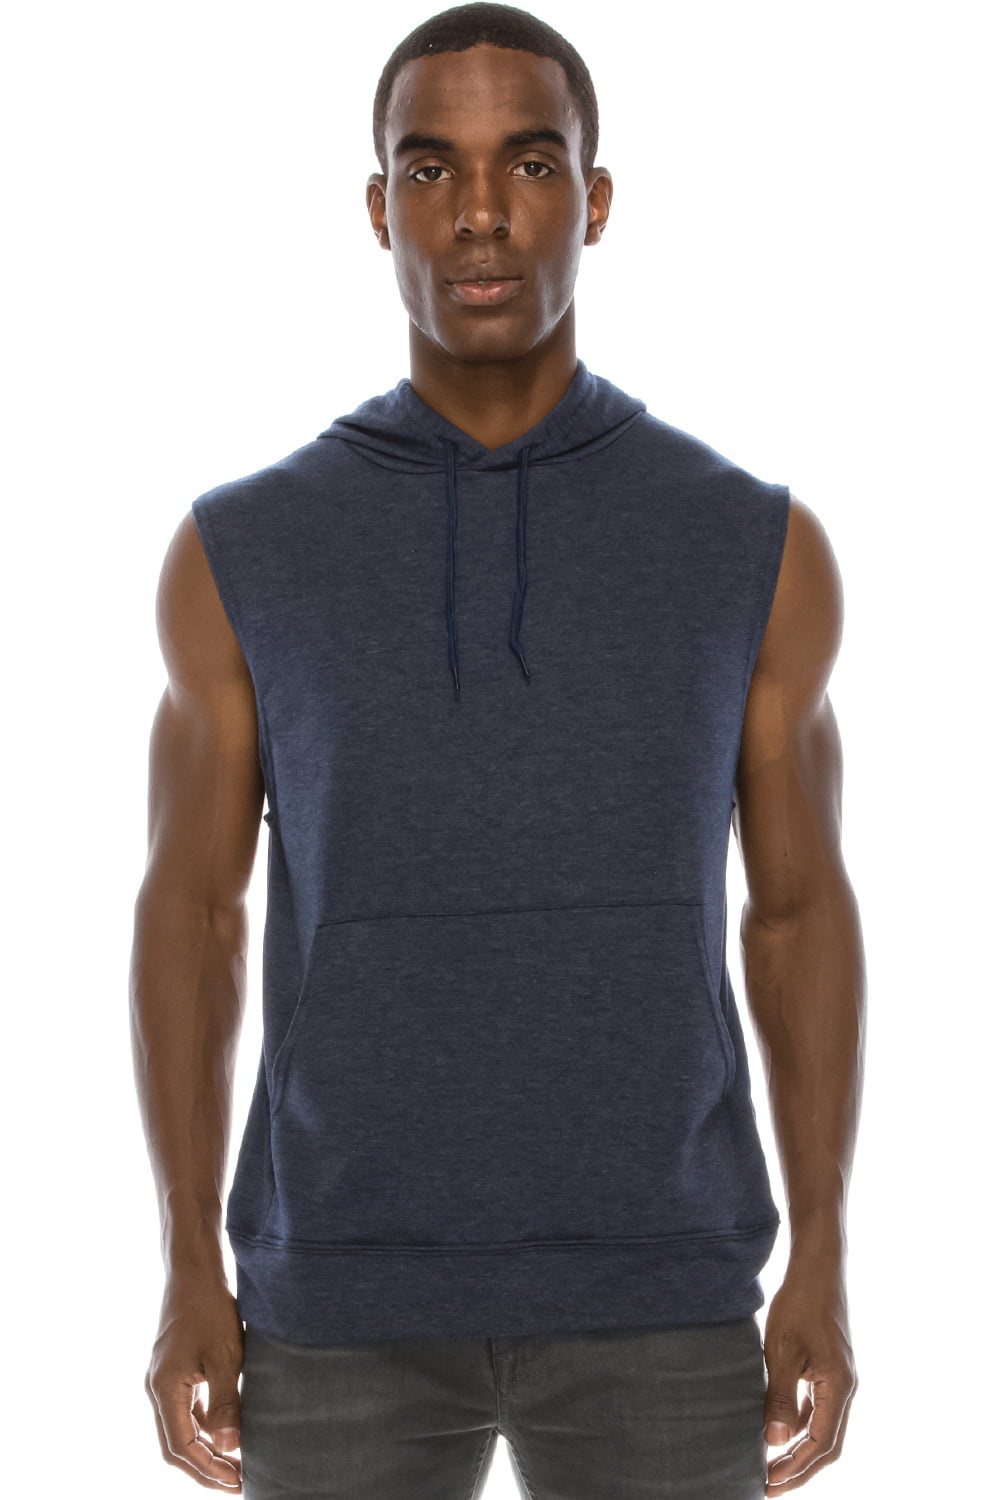 JC DISTRO Mens Hipster Hip Hop Fashion Long Sleeve Layered Elong Hoodie Sweatshirts 